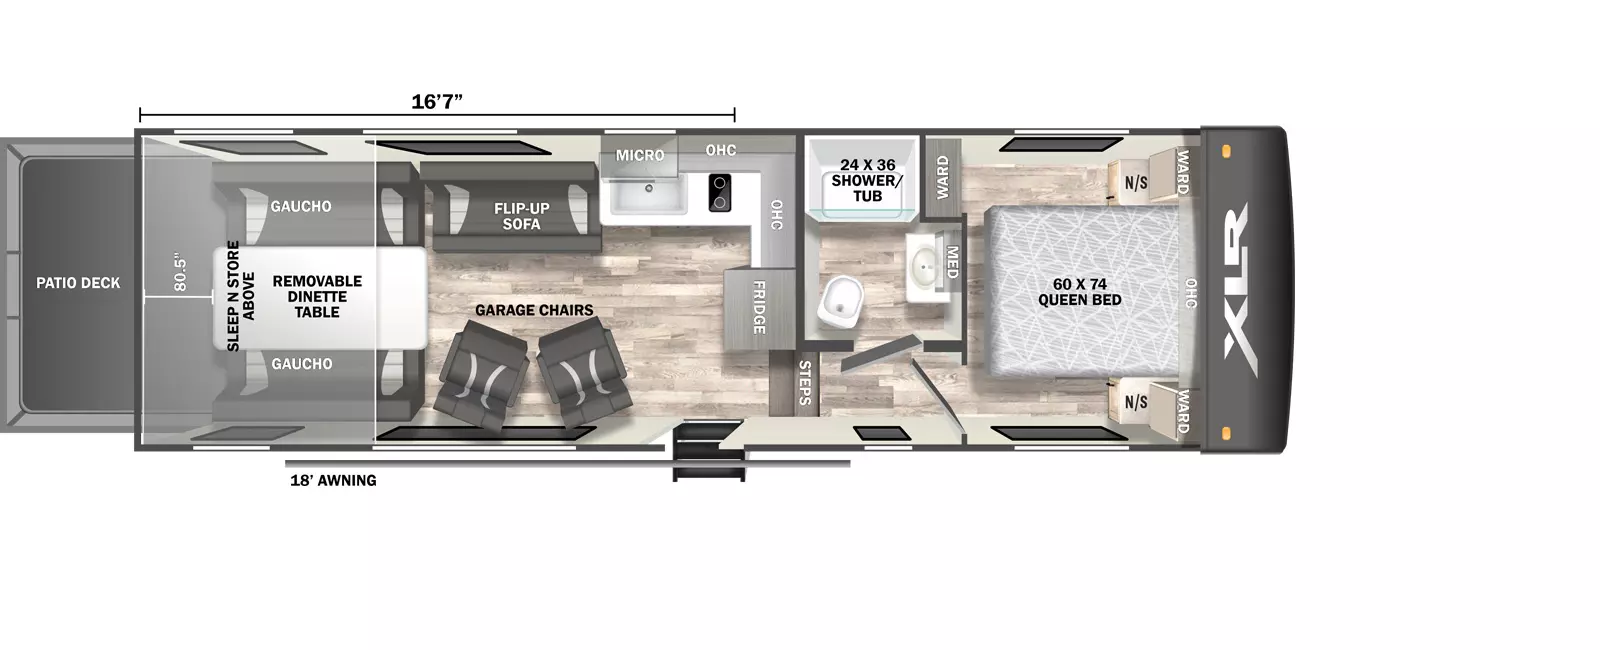 31A (Coming Soon) Floorplan Image